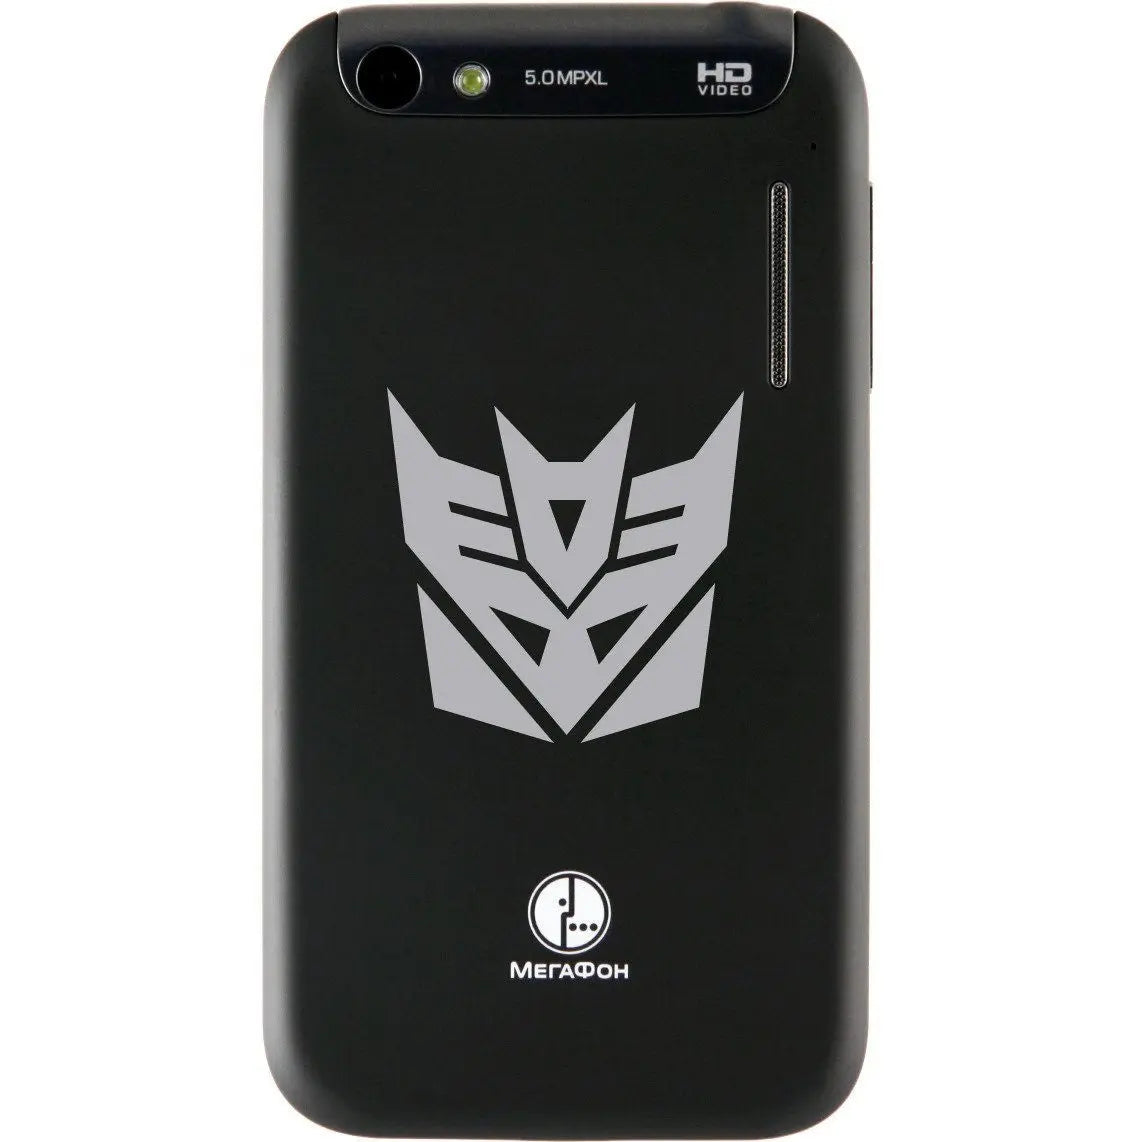 Decepticon Transformers Logo Bumper/Phone/Laptop Sticker n/a